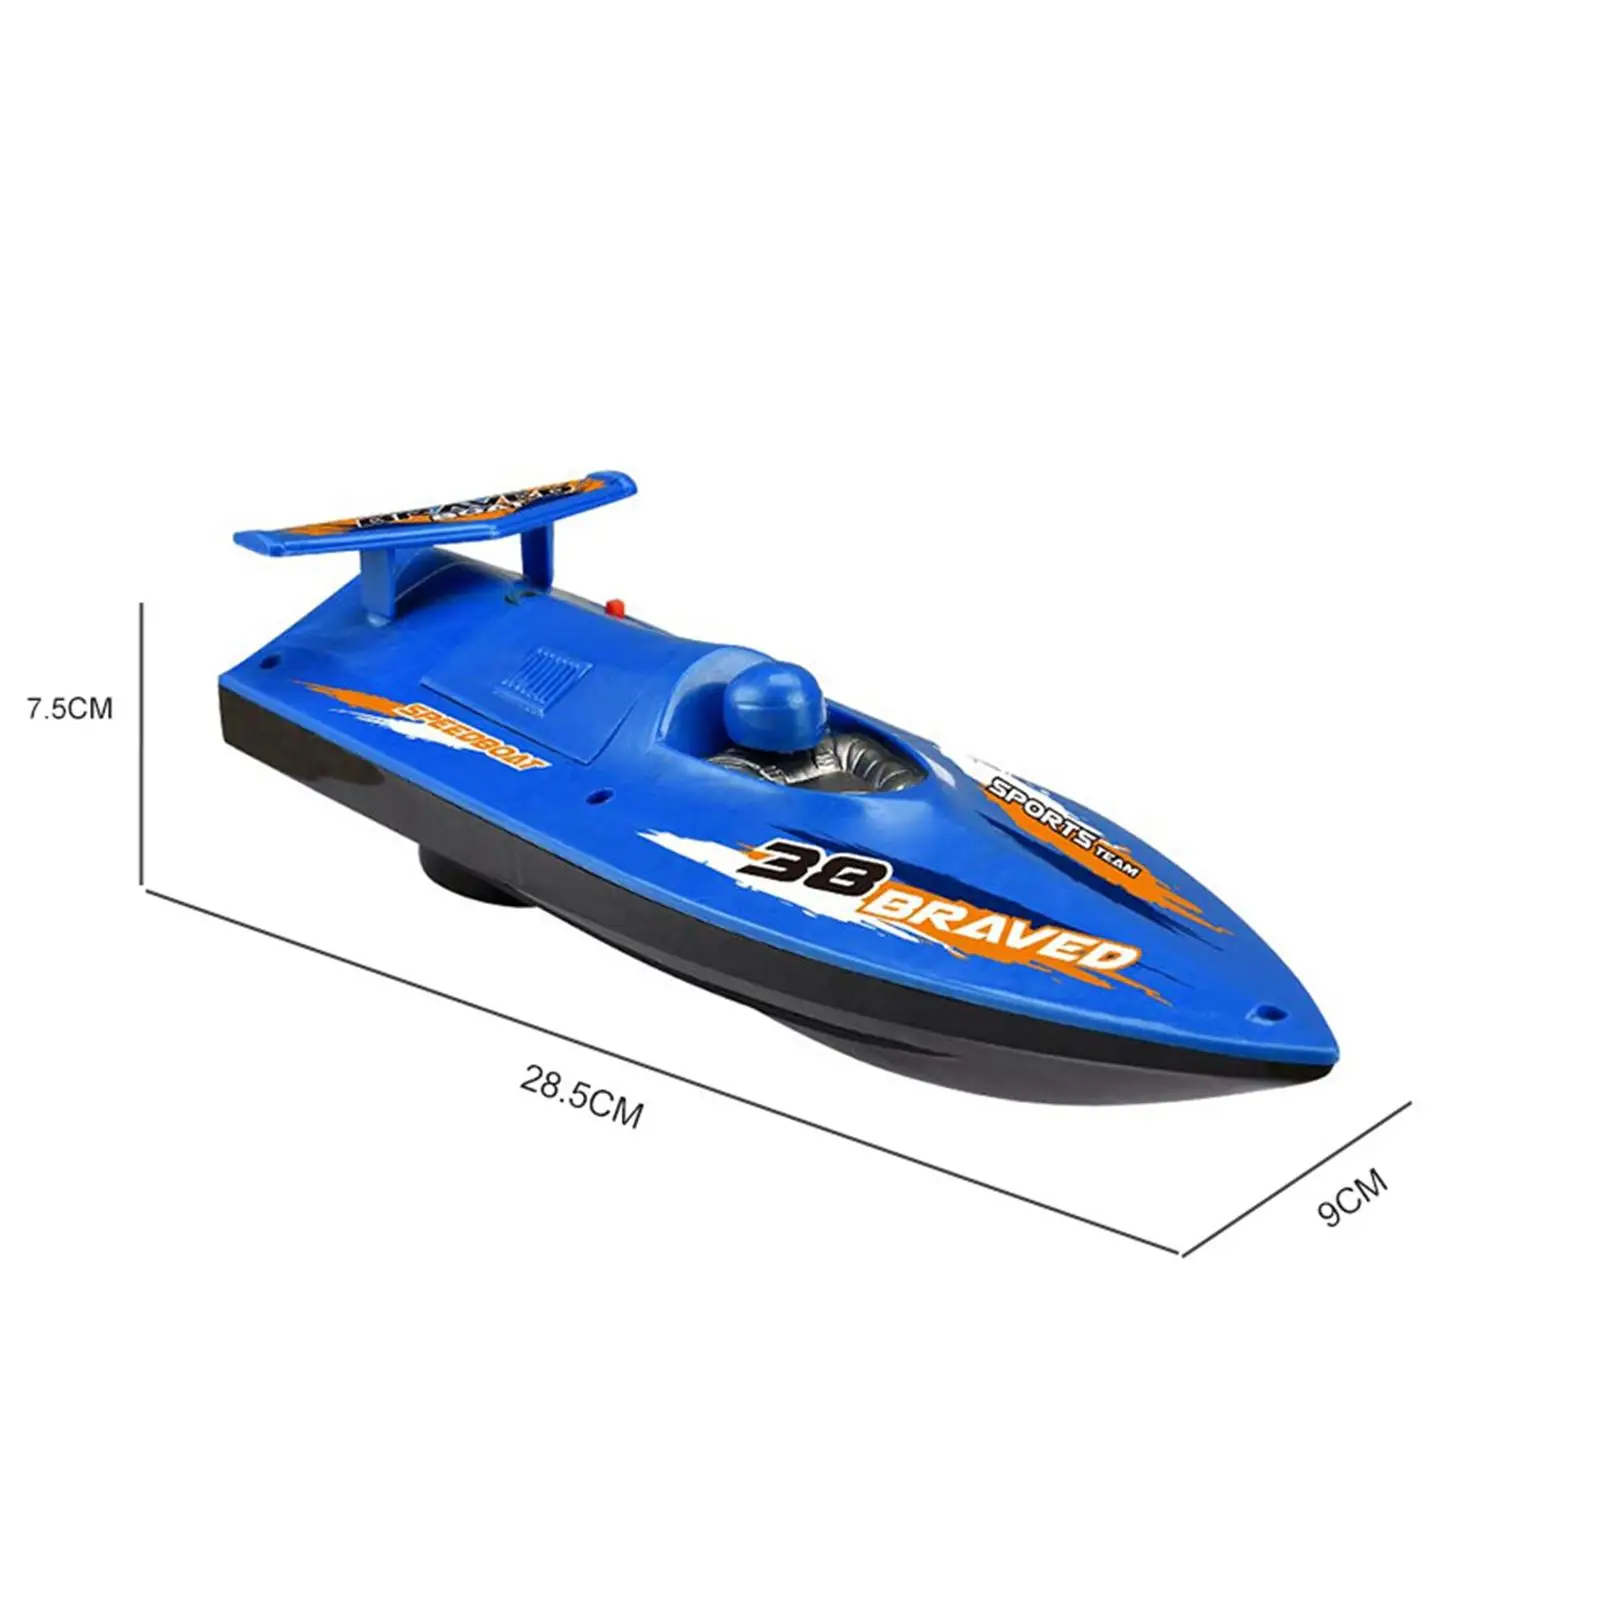 Yacht Pool Toy Sailing Boat Bathtub Toy Electric Speed Boat Toy Bath Boat Toy for Streams